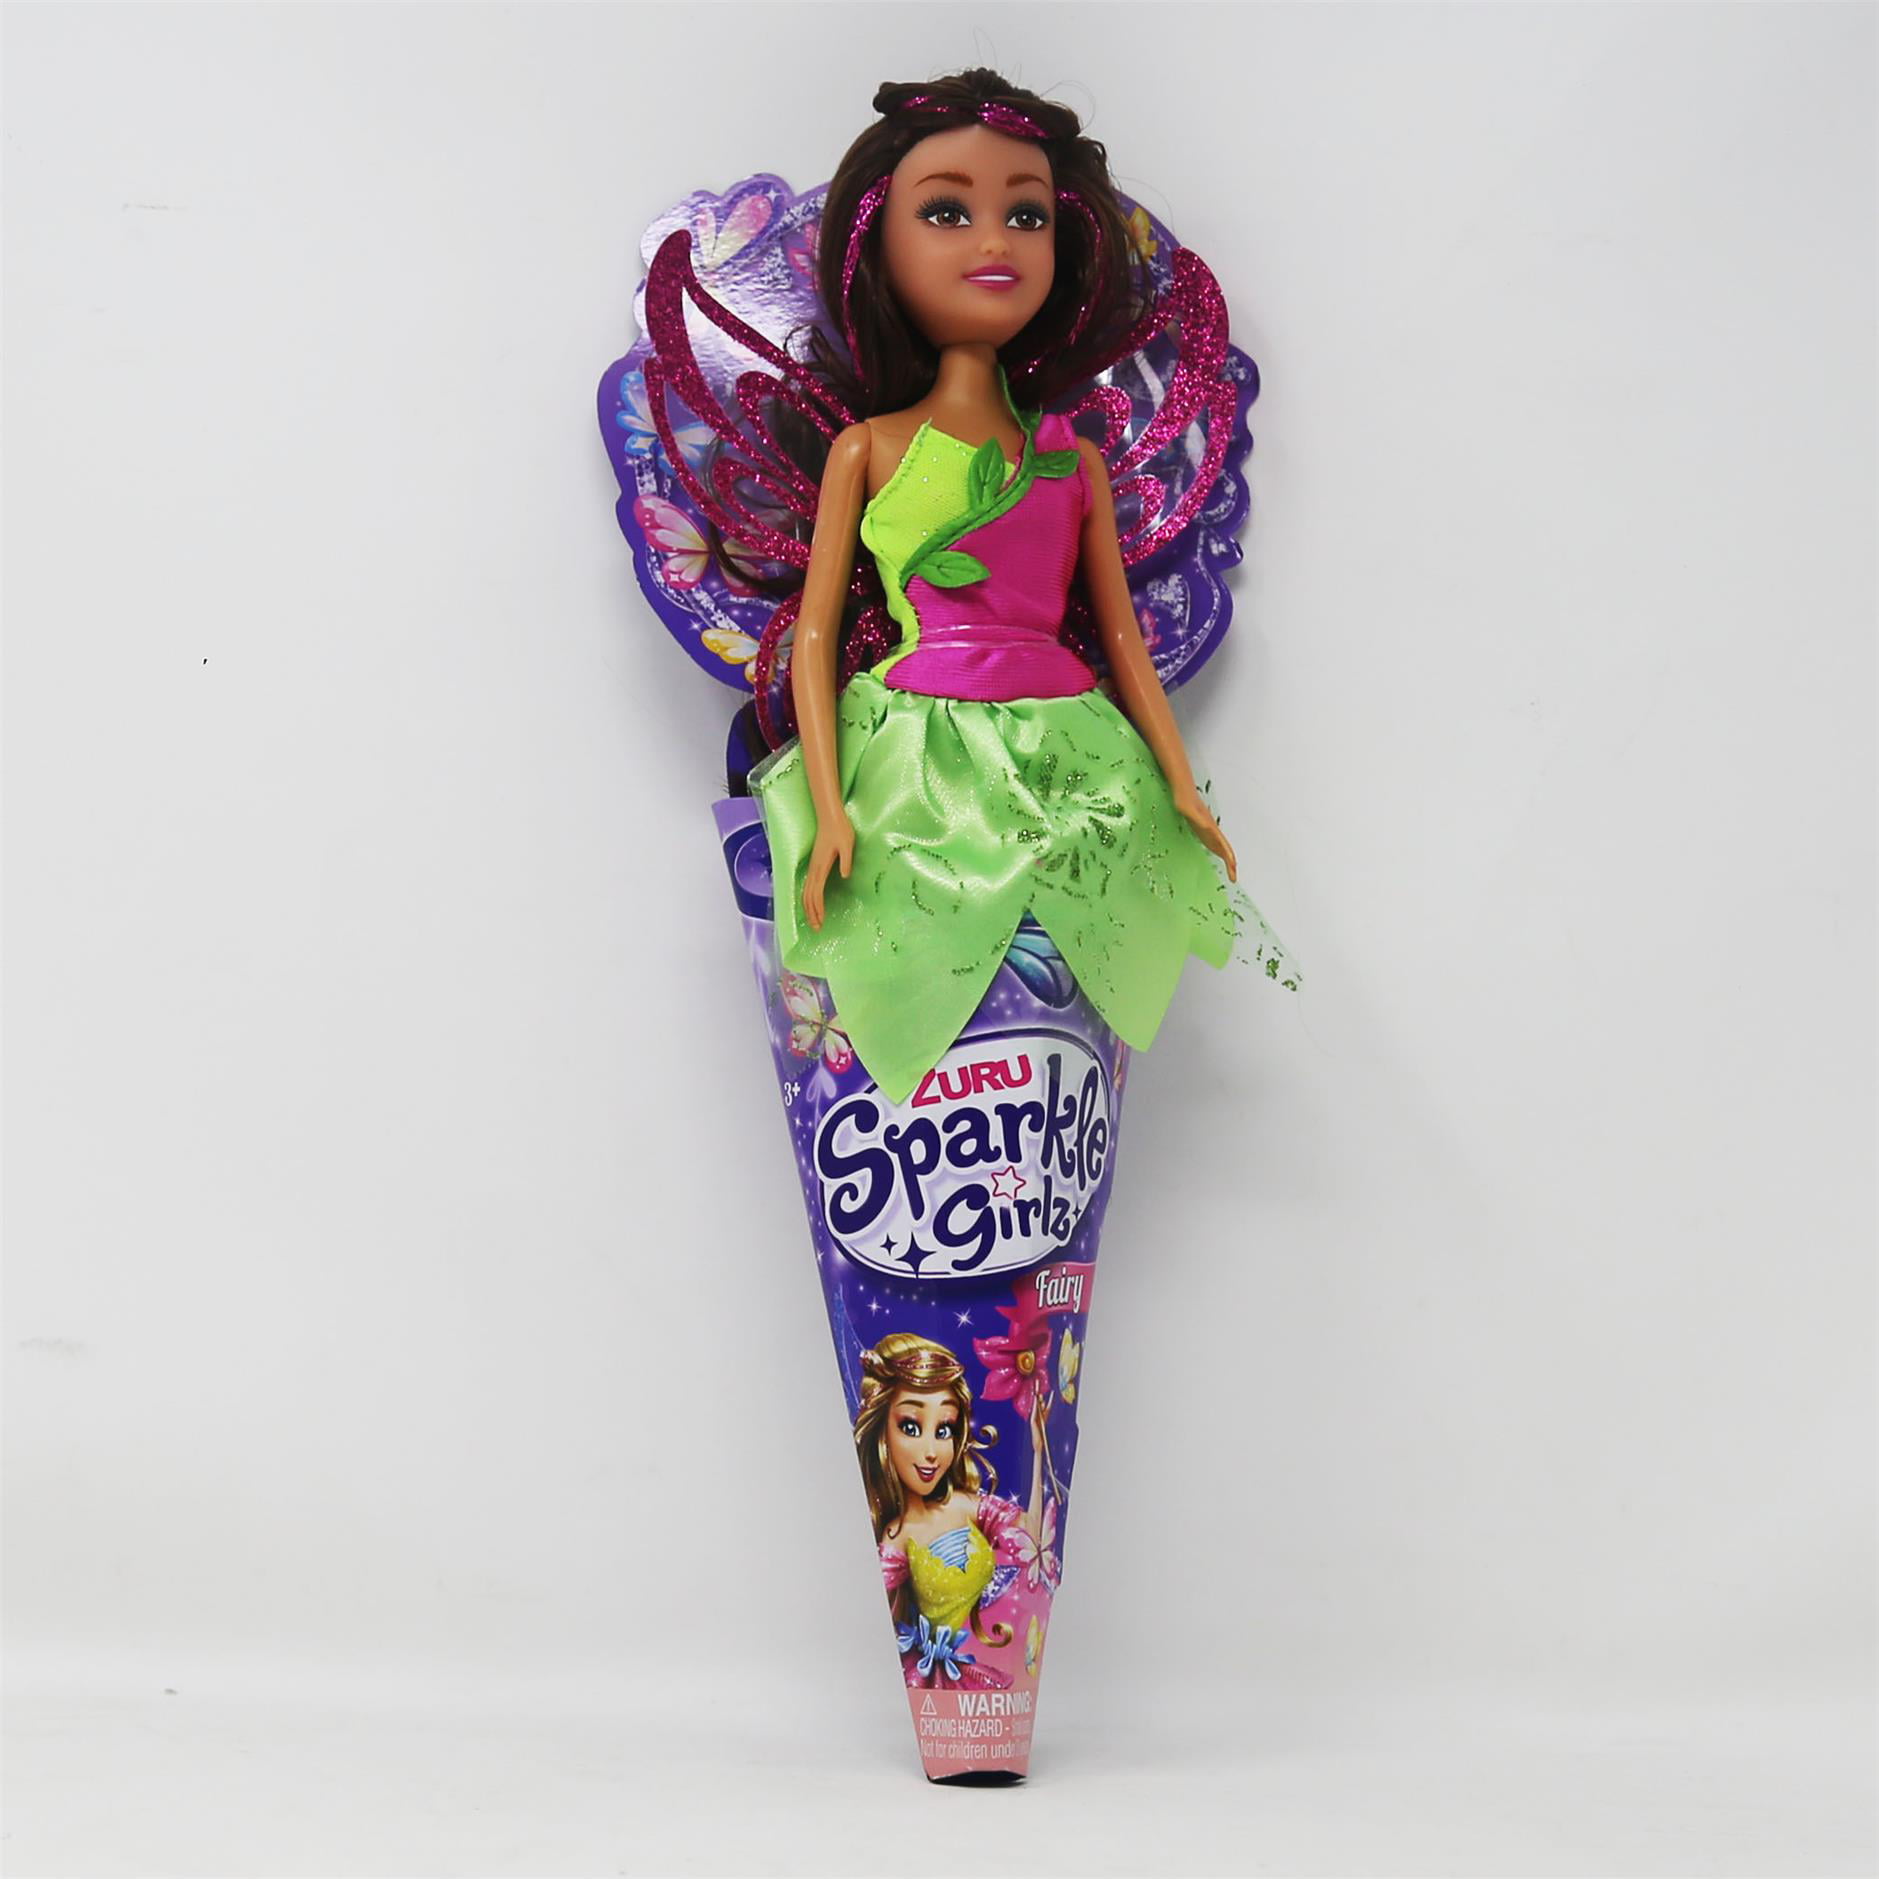 ZURU Sparkle Girlz Fairy Doll 10.5 Height Ages 3 - 99